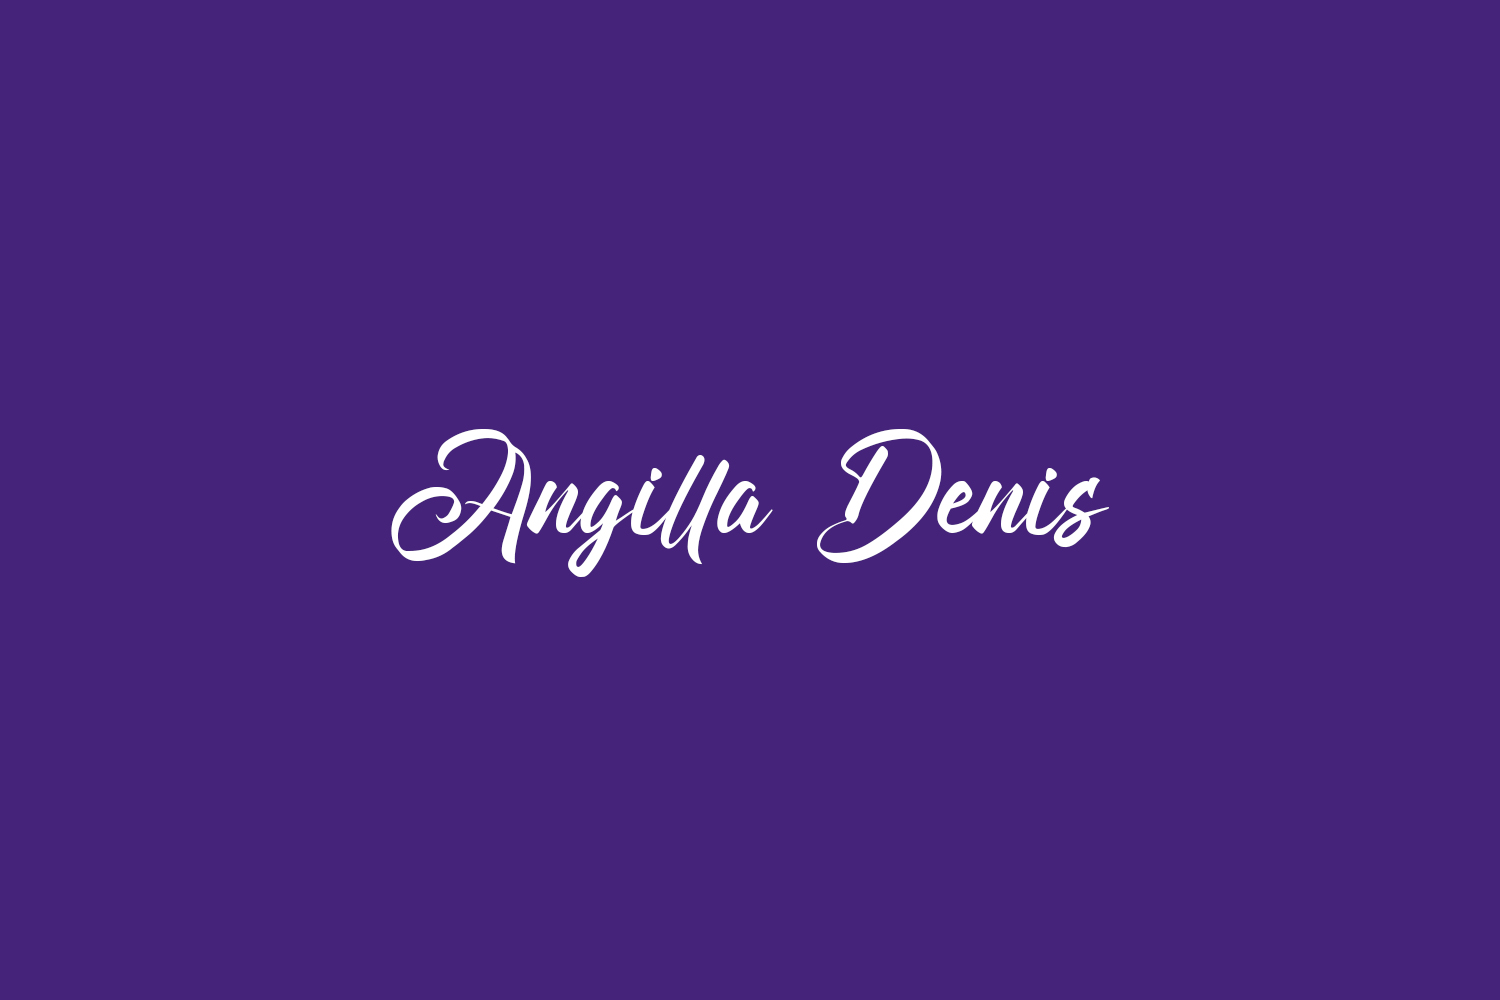 Angilla Denis Free Font